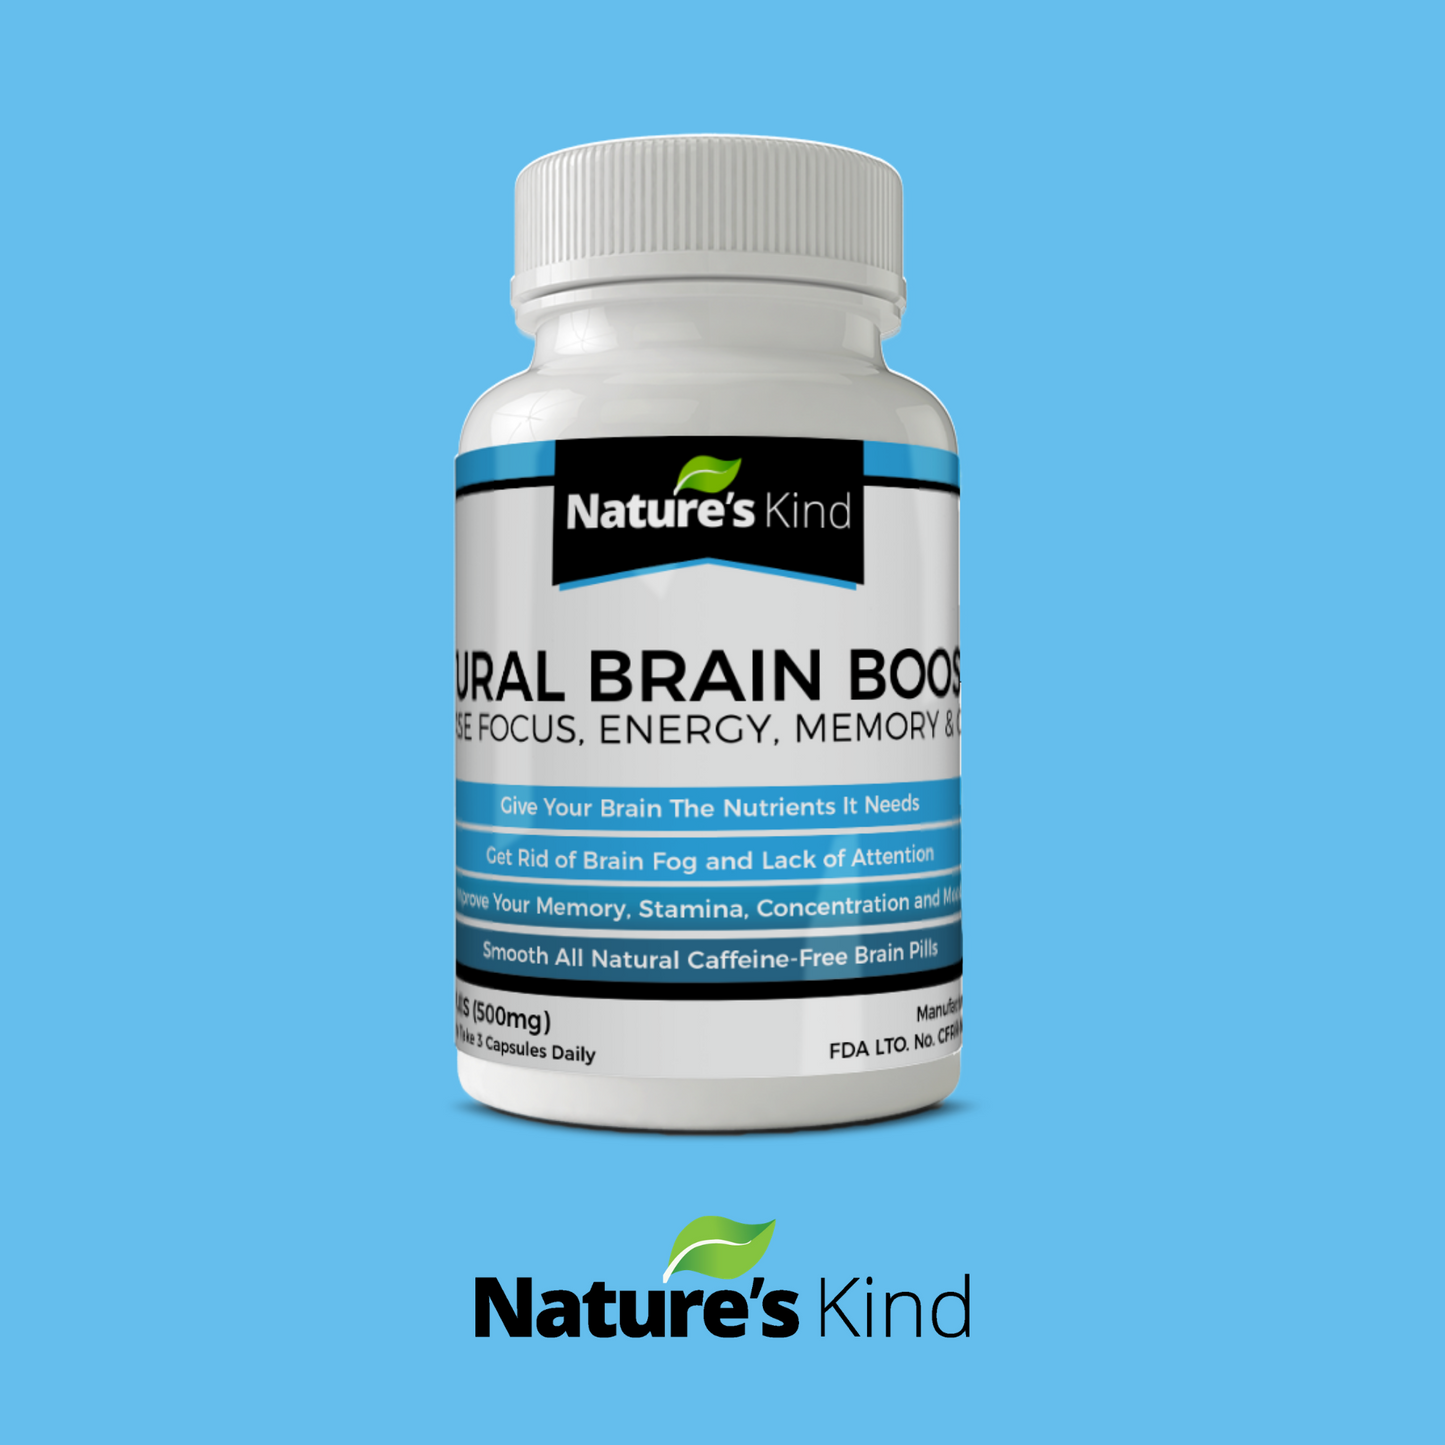 VitalMind Brain Booster Nootropics - Increase Focus, Energy, Memory & Clarity ★ Best Brain Vitamin Supplement